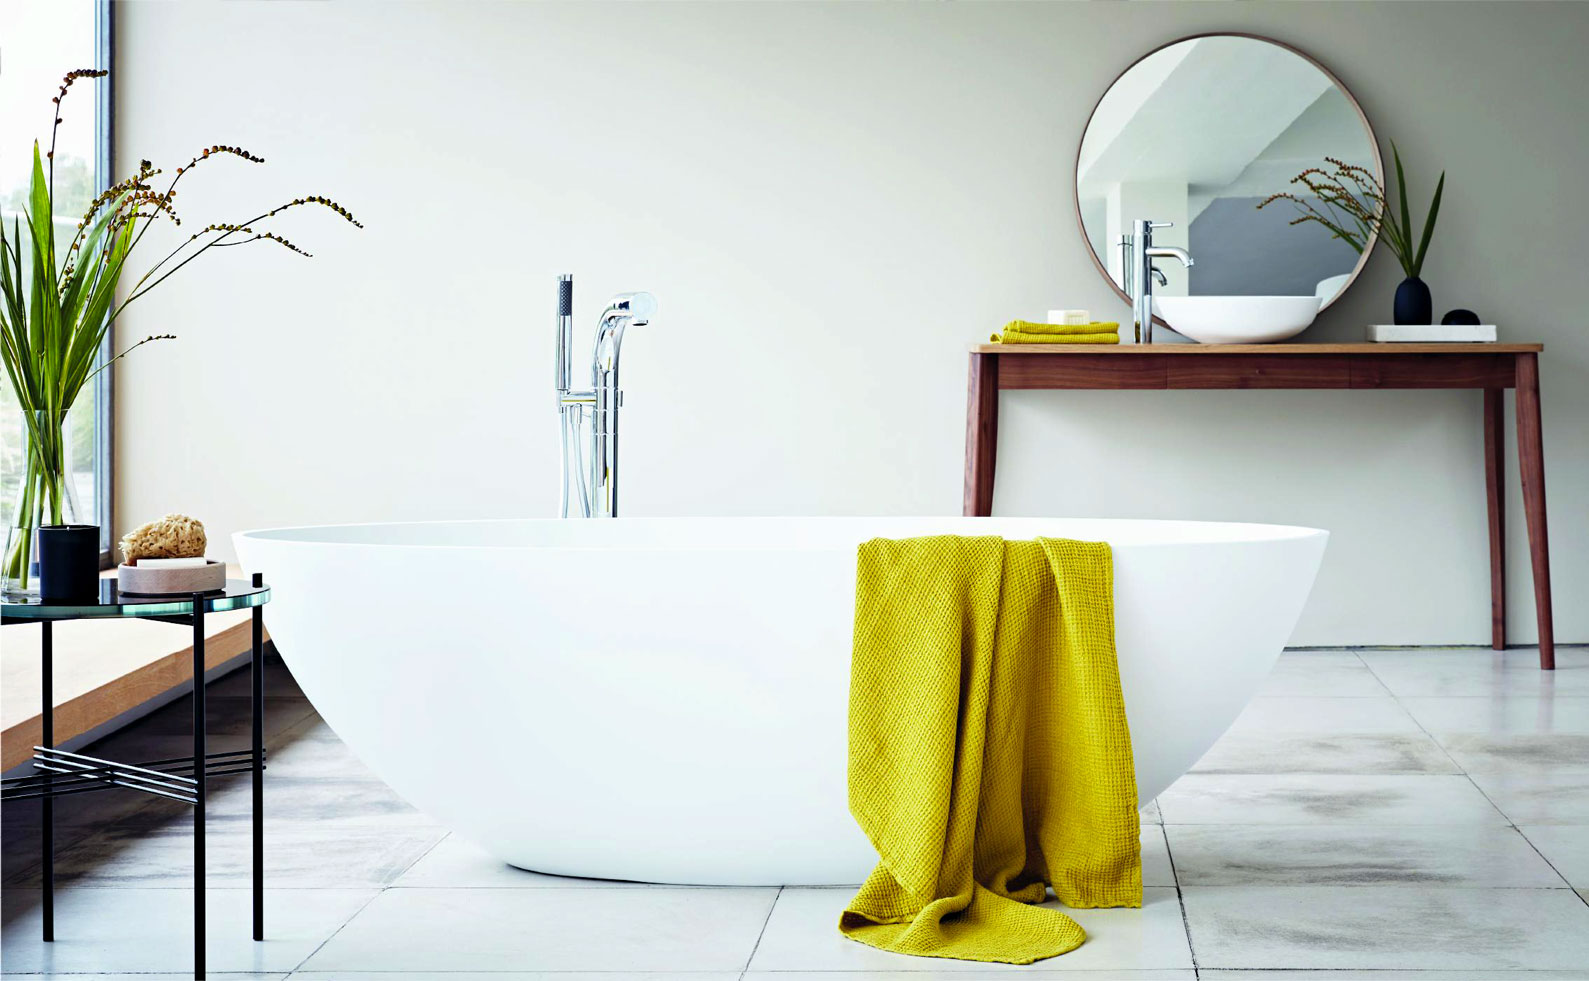 Ribble Valley Bathrooms yellow towel waters bath image